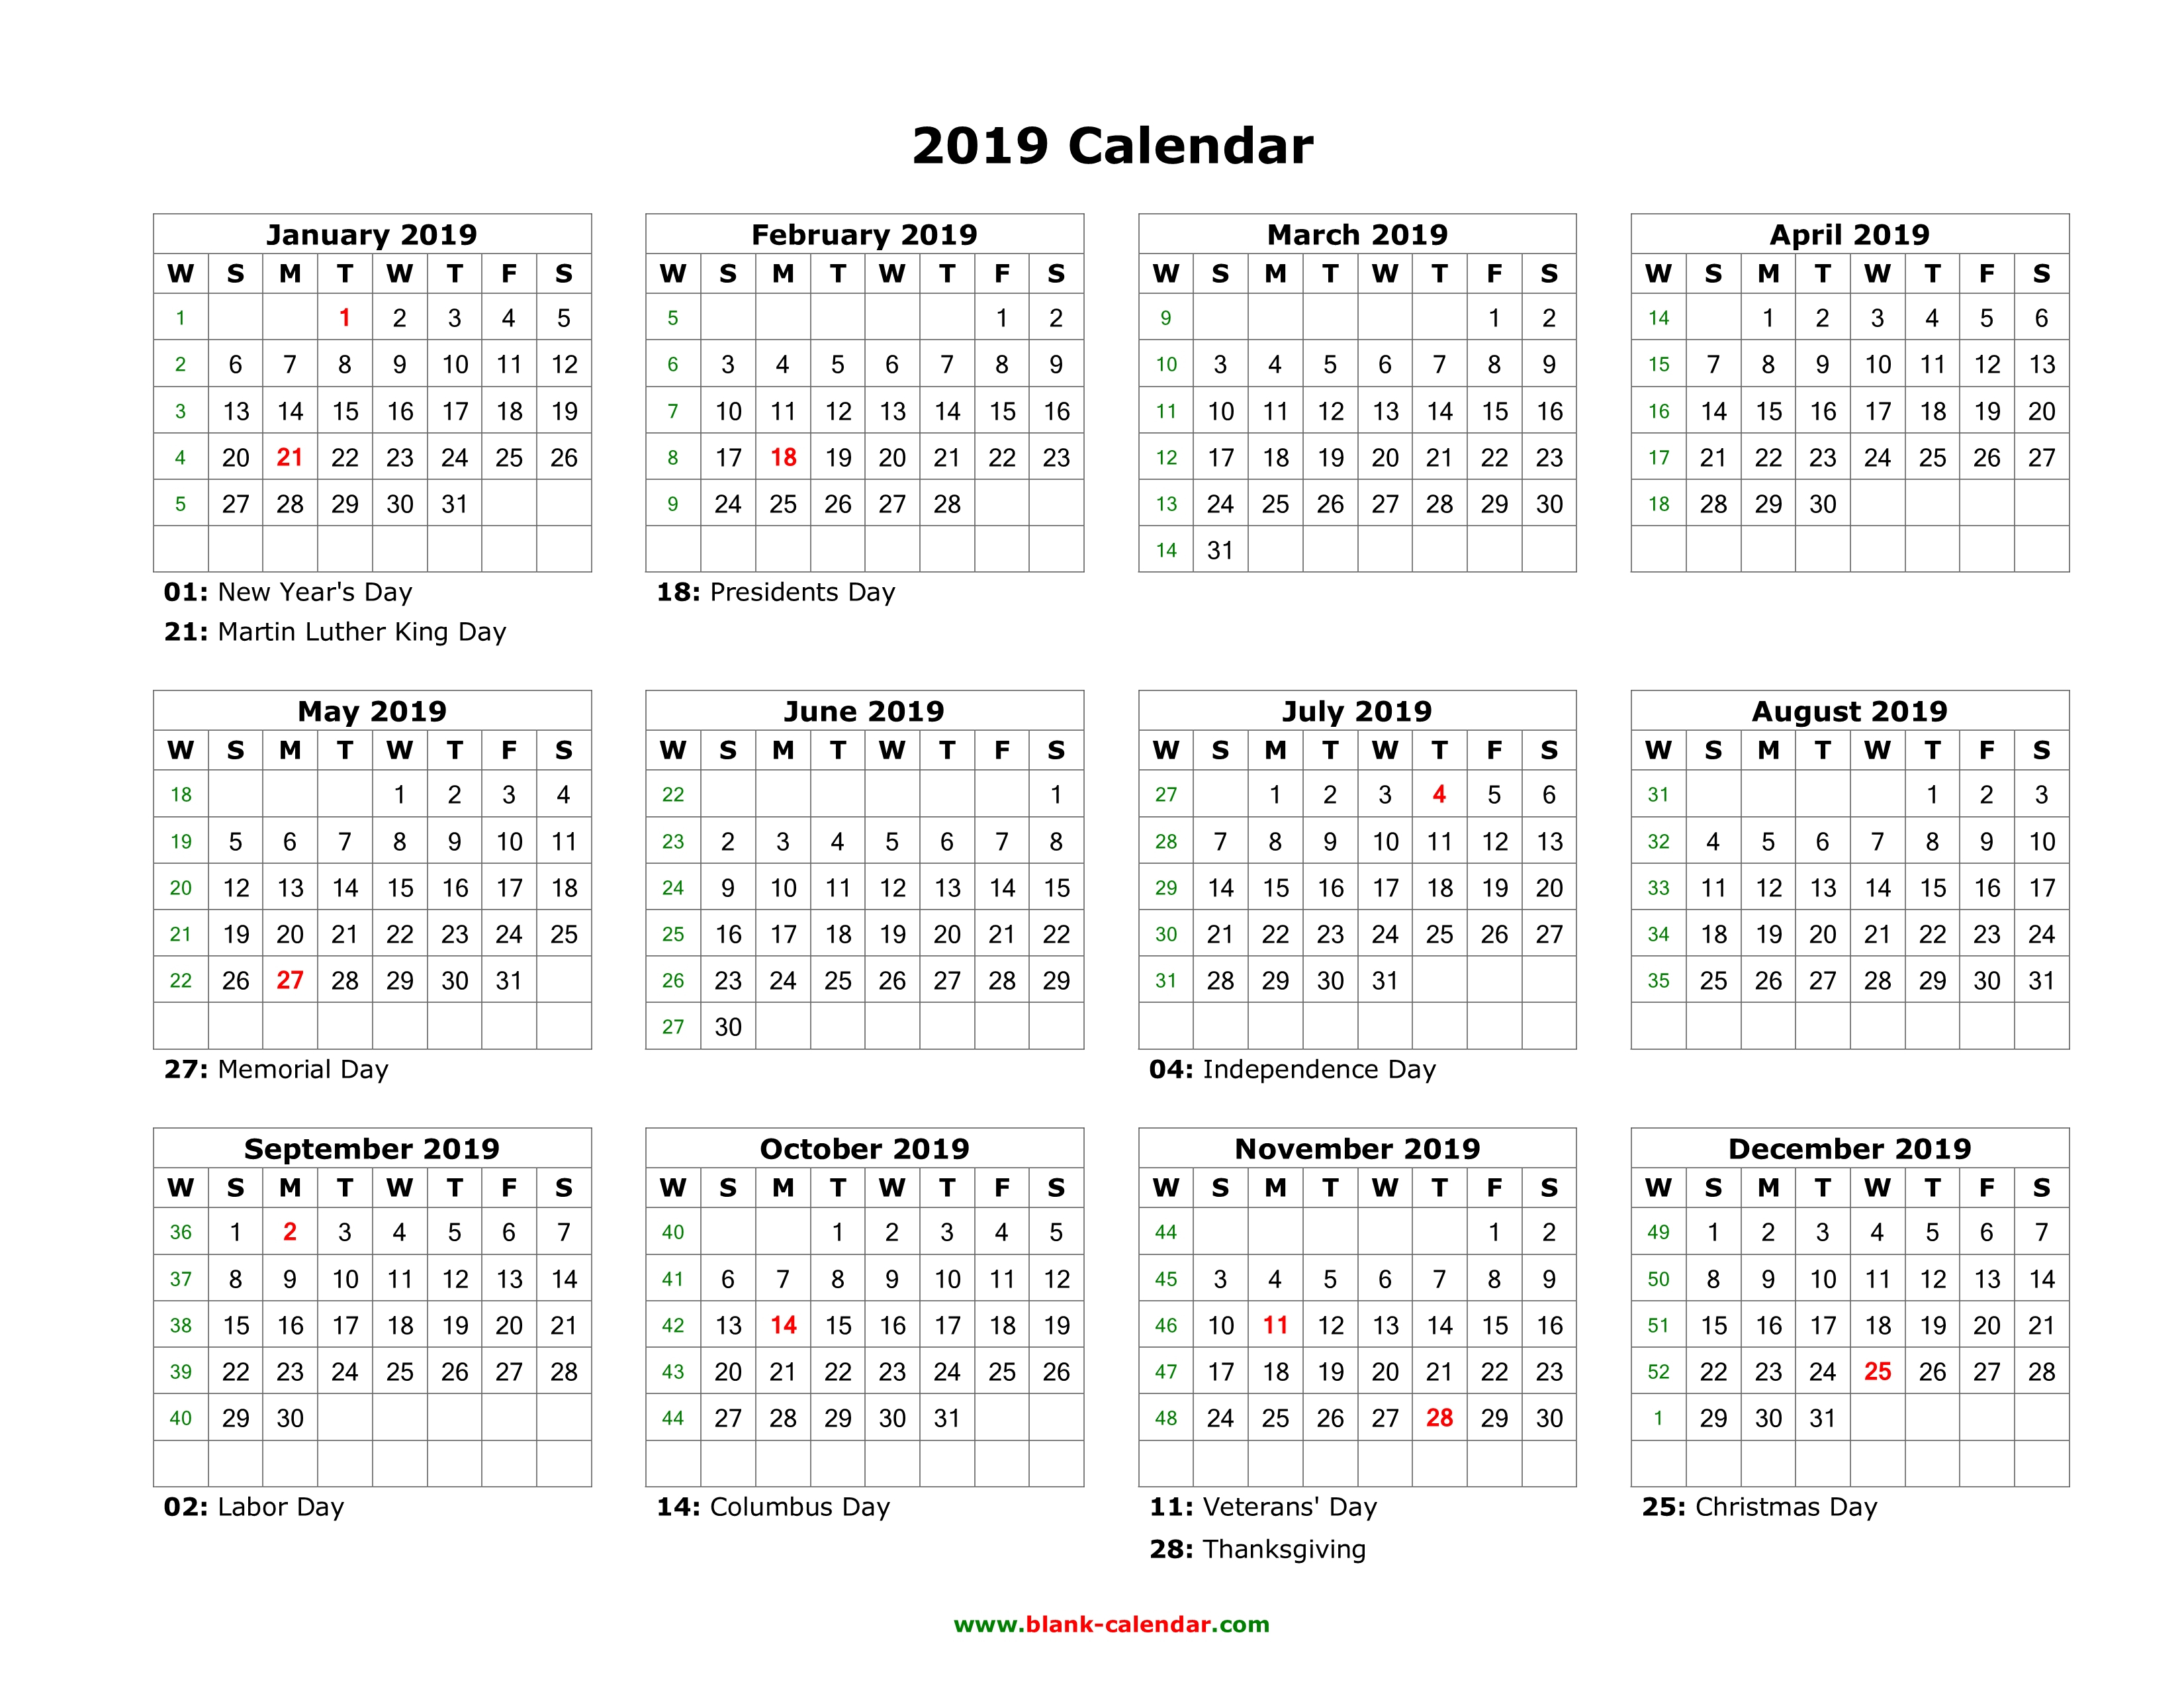 Blank Calendar 2019 | Free Download Calendar Templates